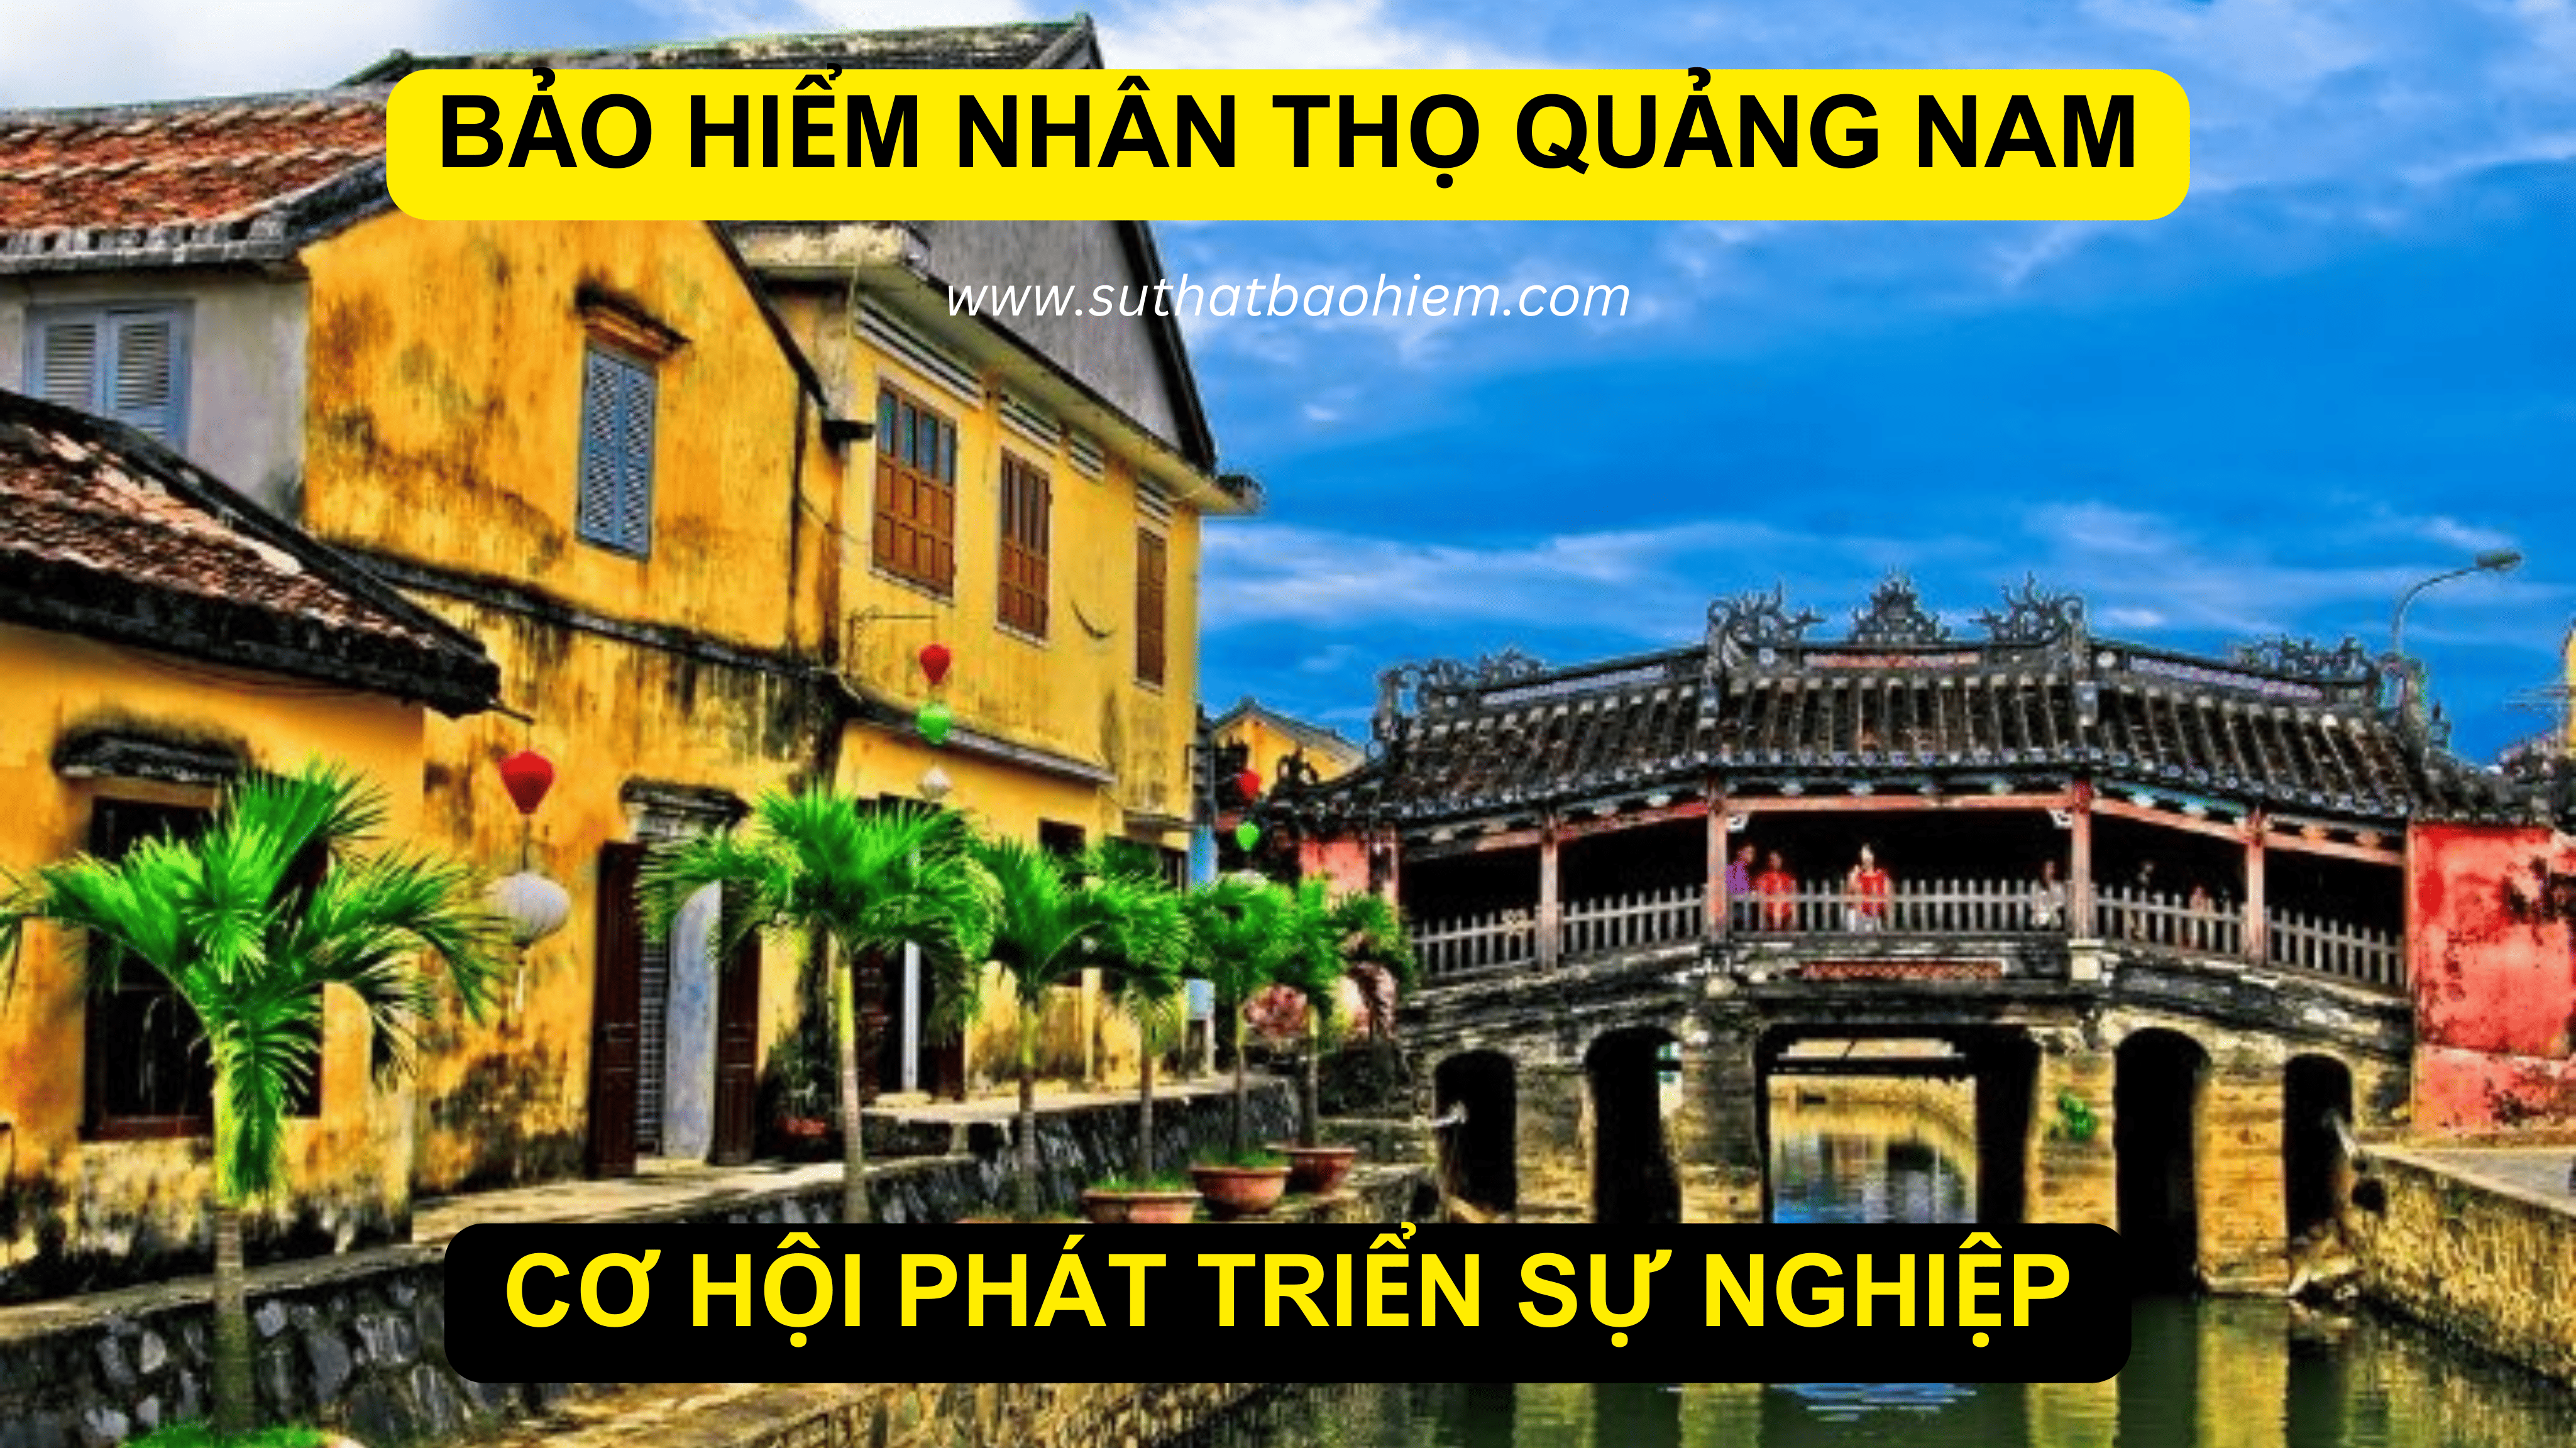 BAO HIEM NHAN THO HAI PHONG 3 2